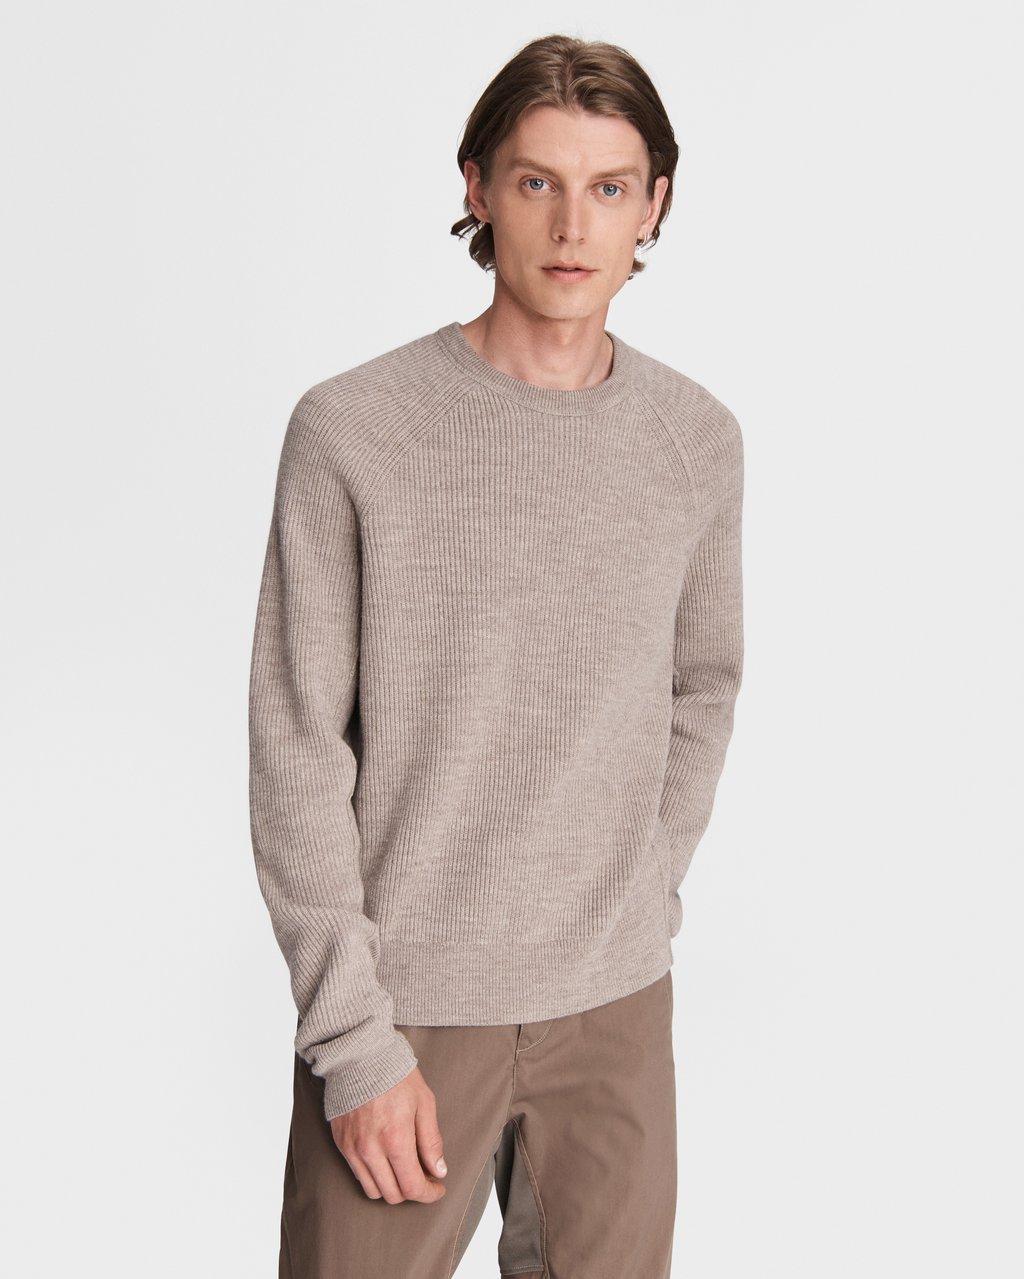 Undyed Wool Sweater